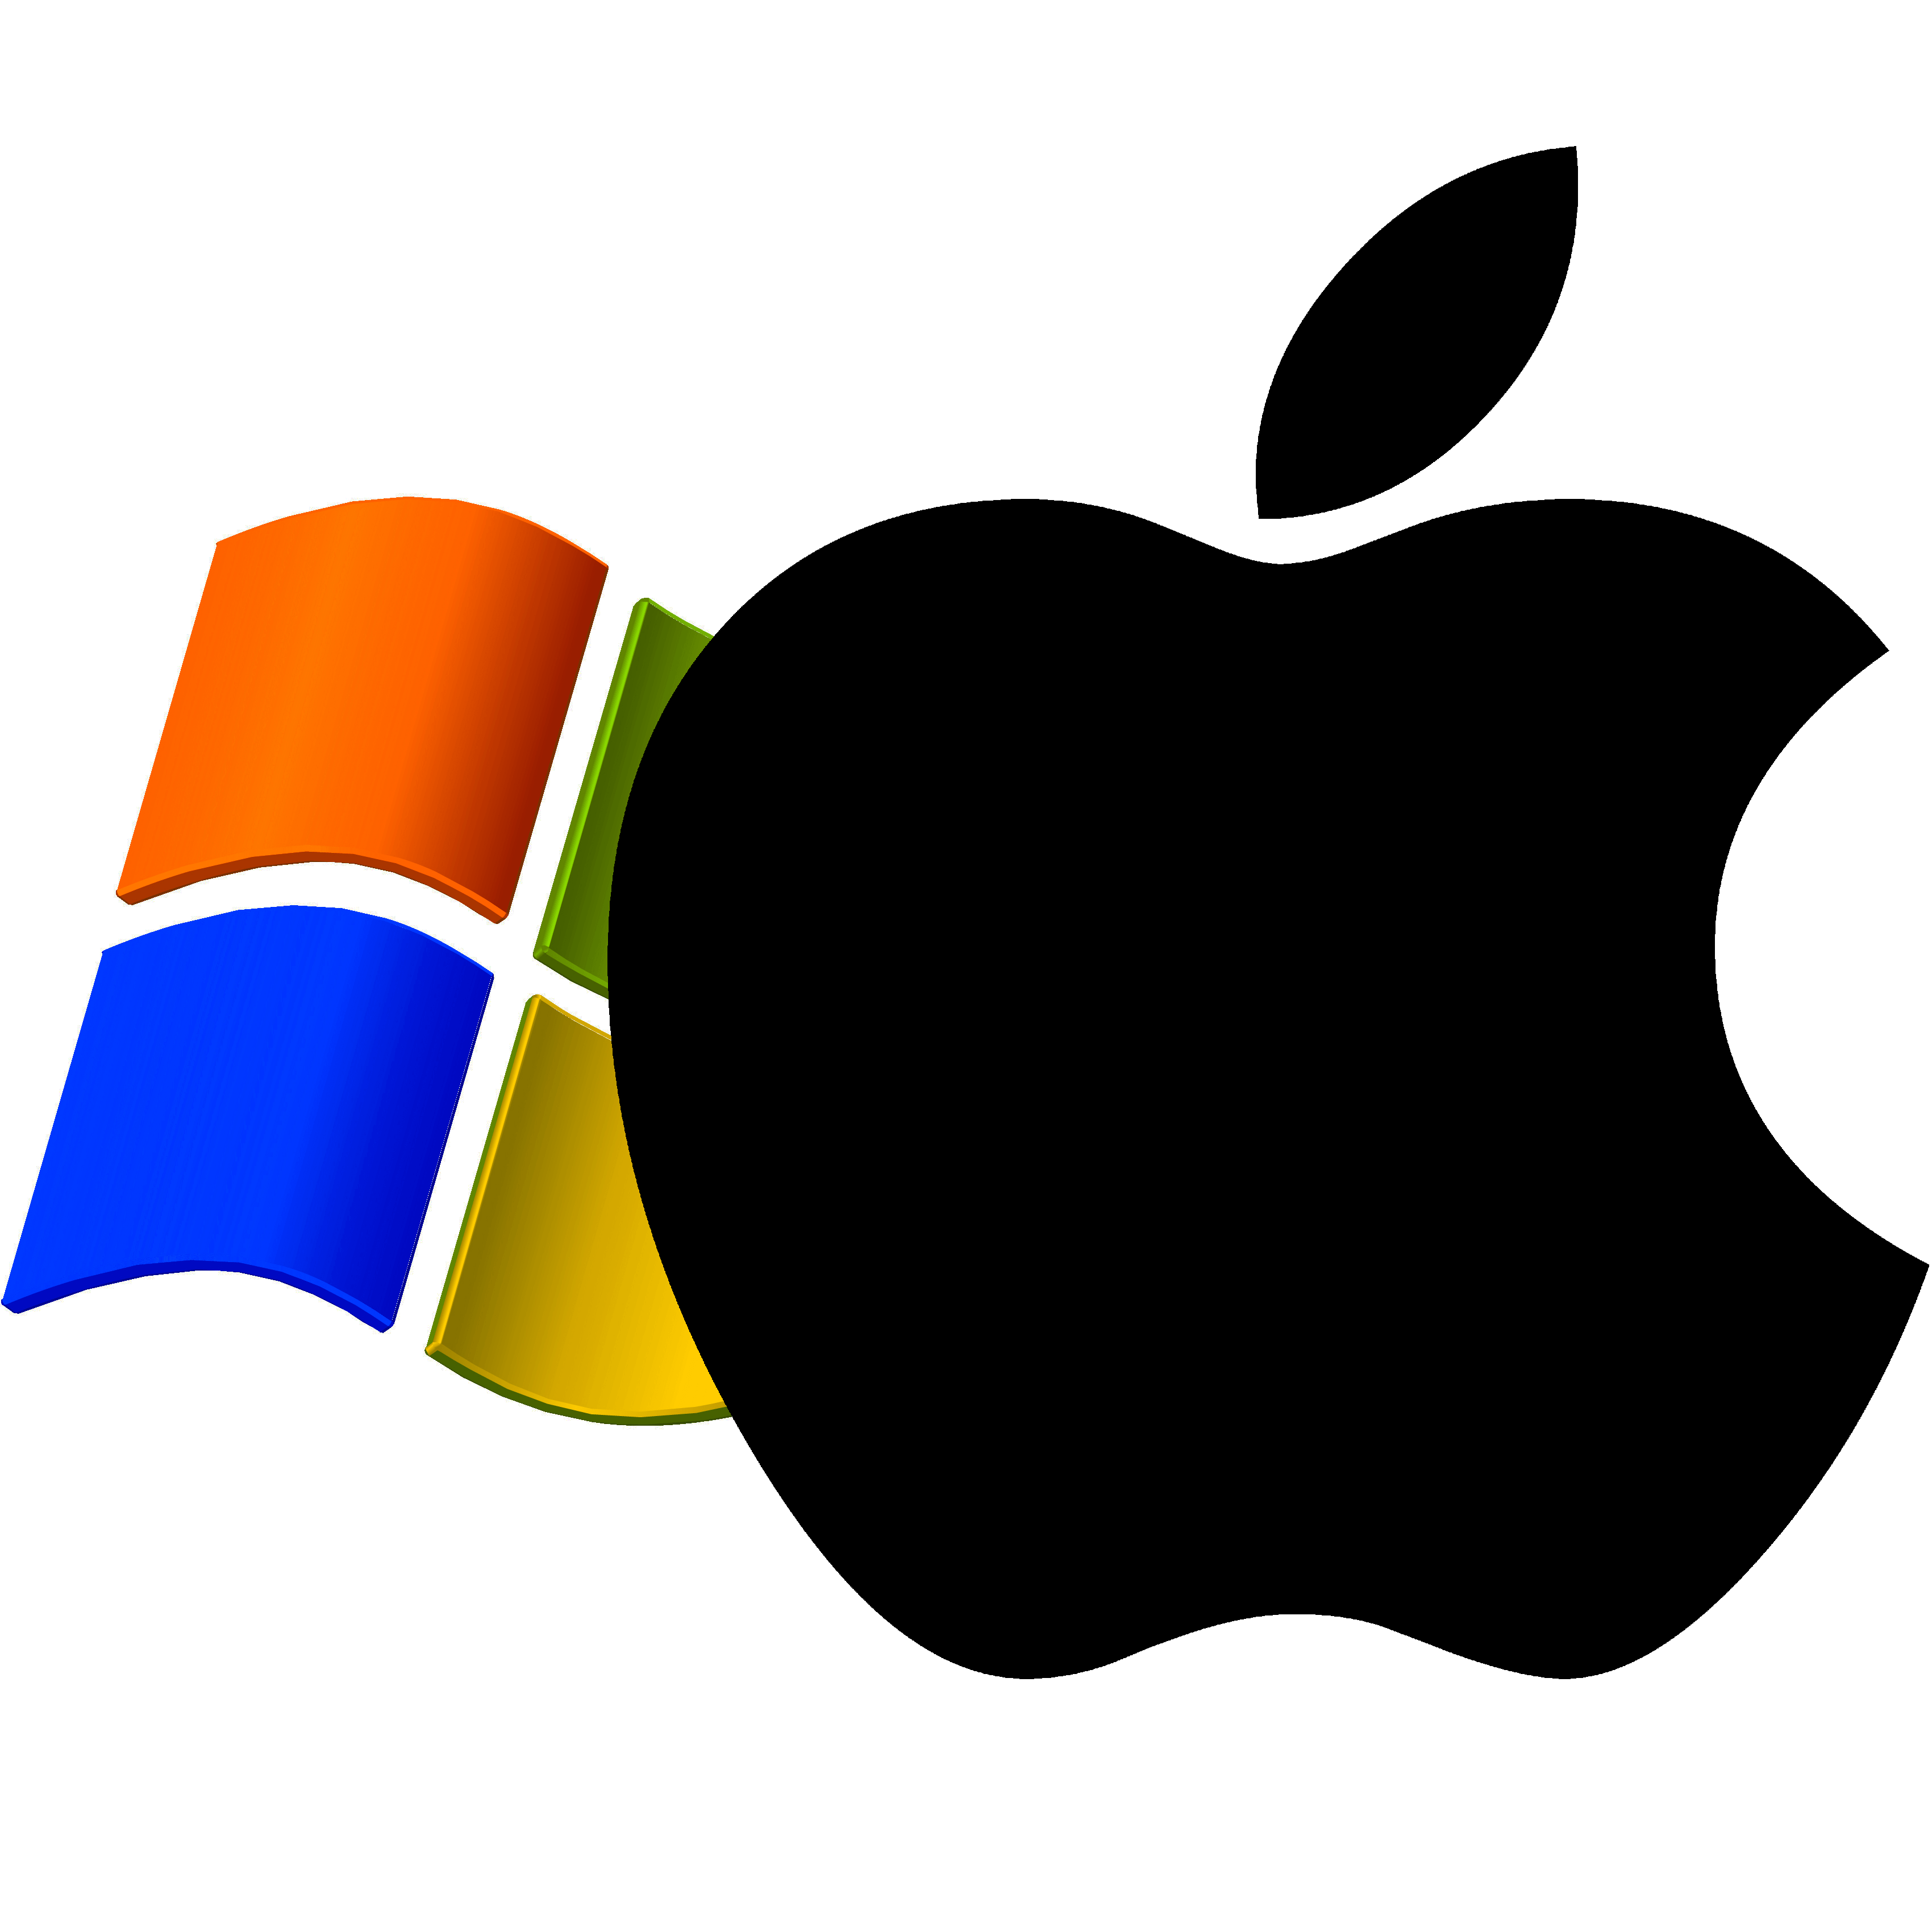 XP Logo - Windows XP logo superimposed by Apple logo | The Mac Security Blog